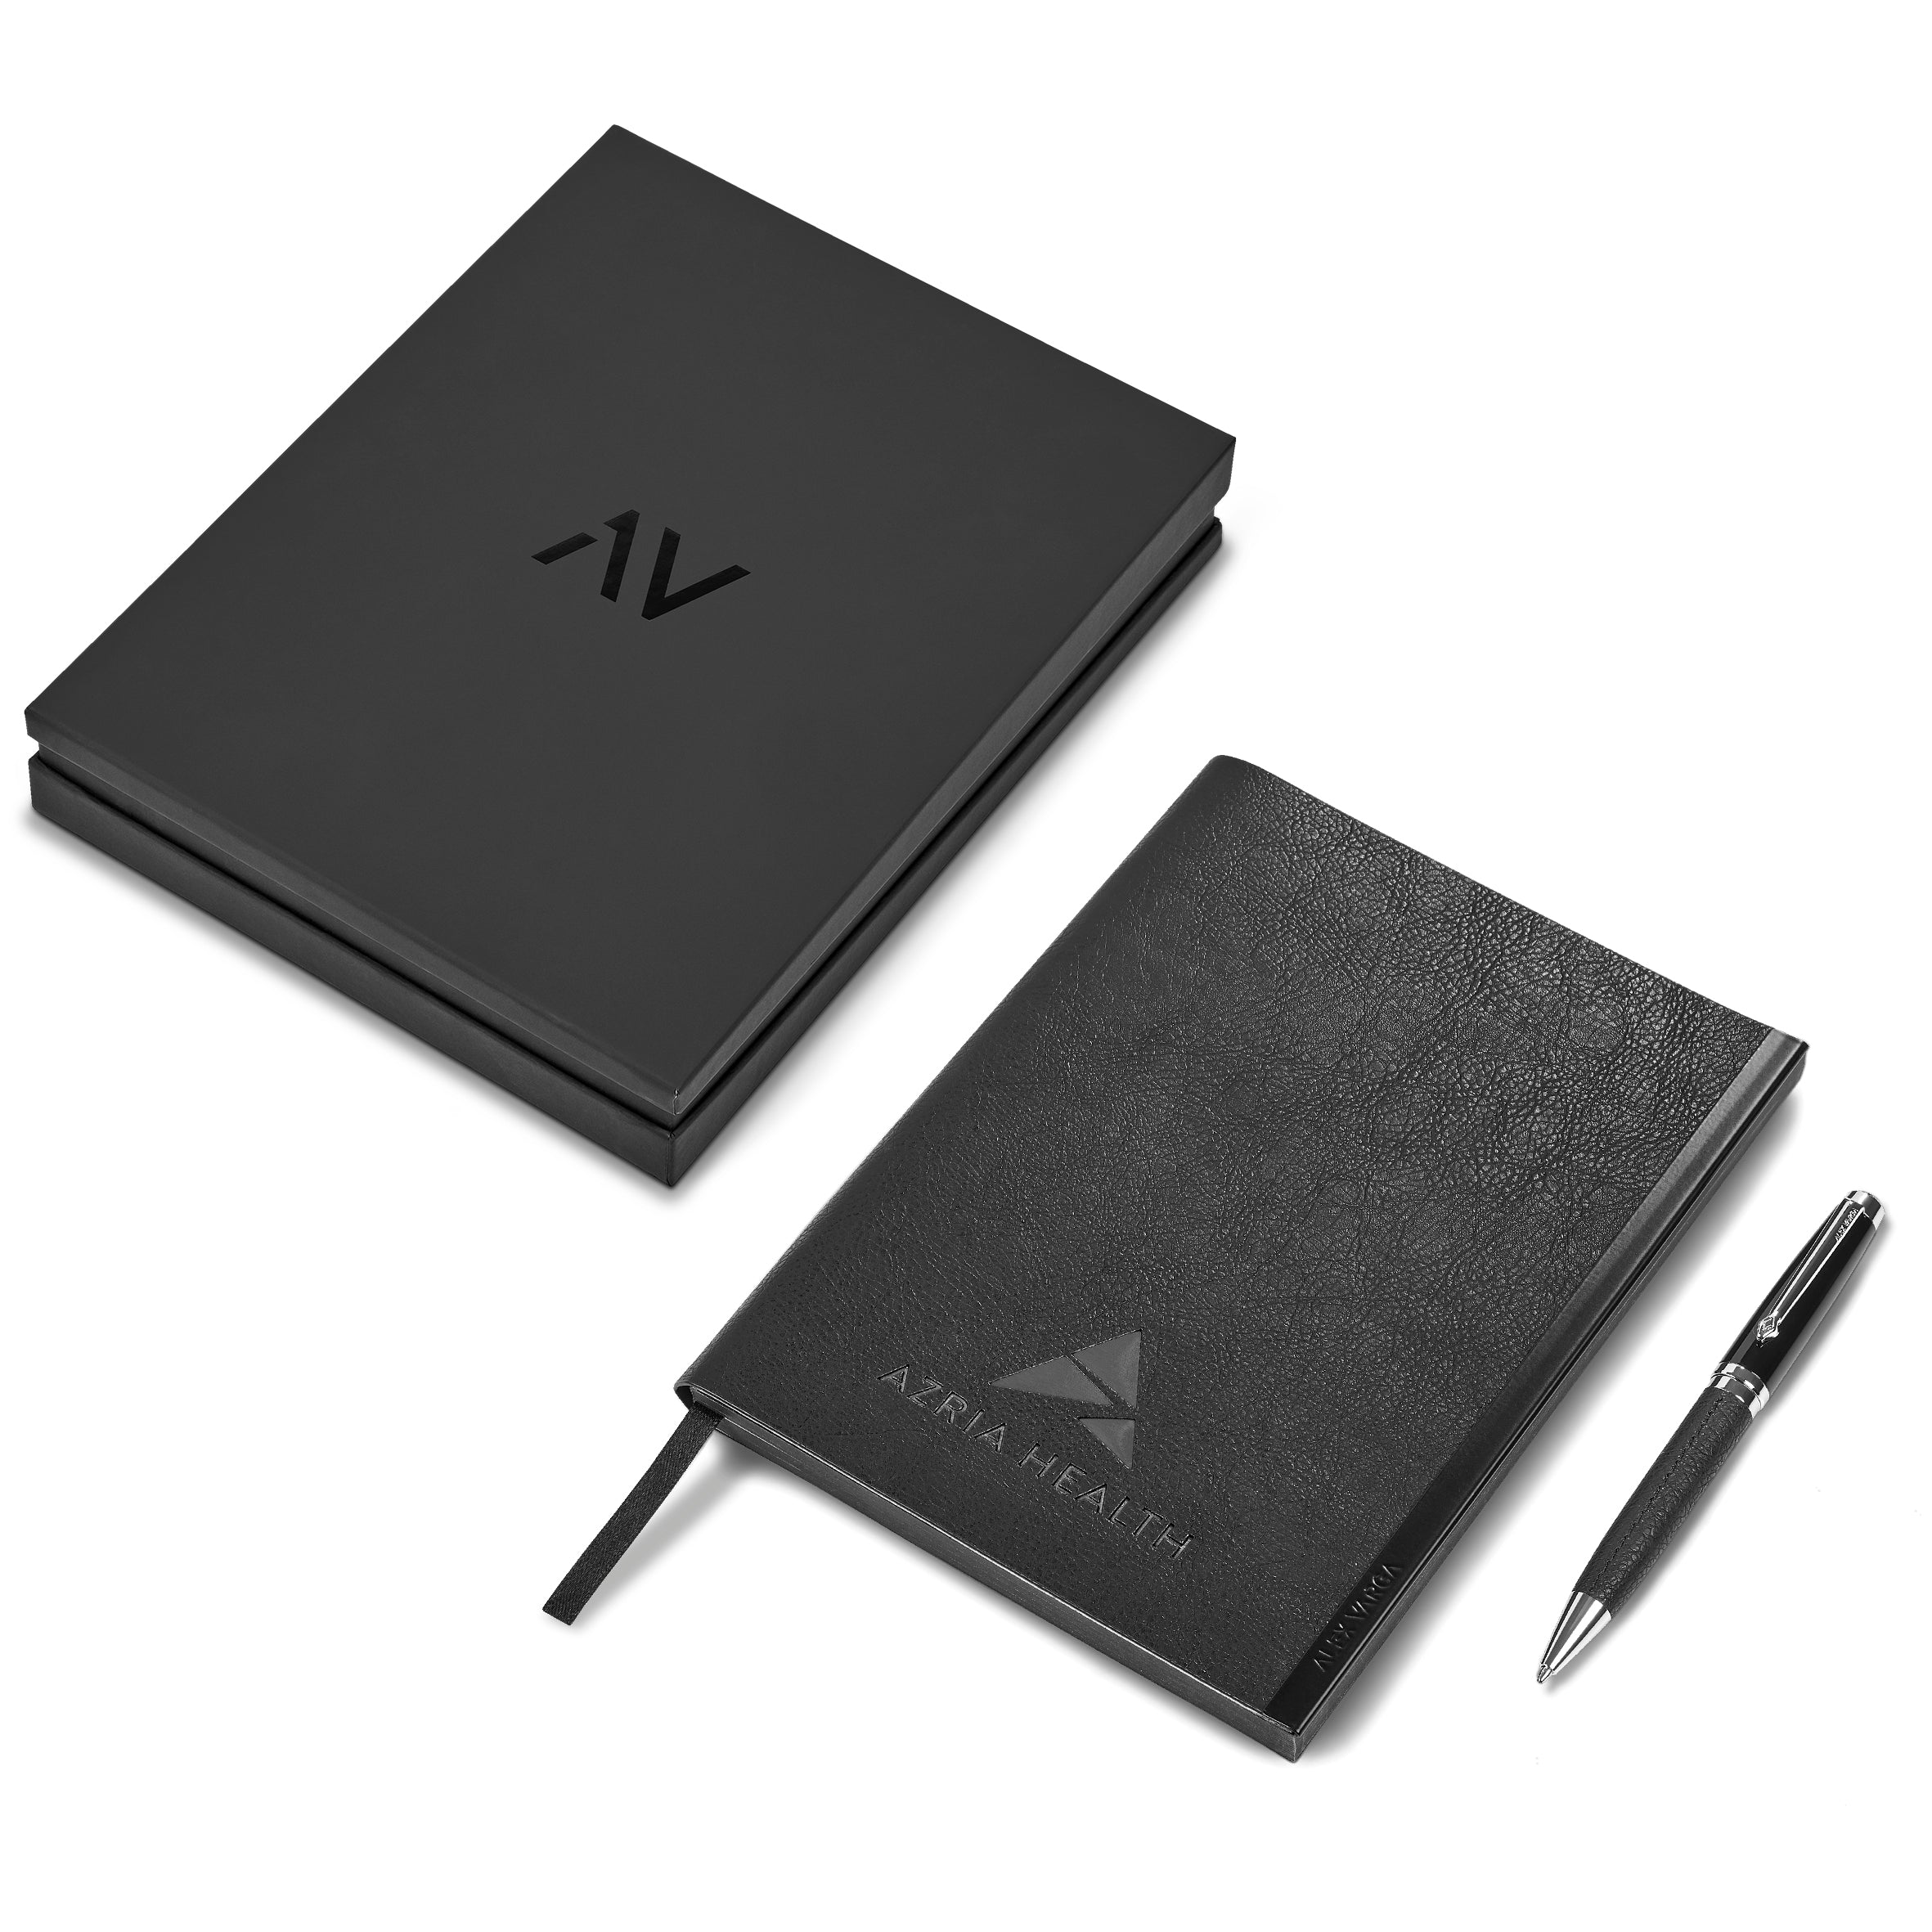 Corinthia Soft Cover Notebook & Pen Set